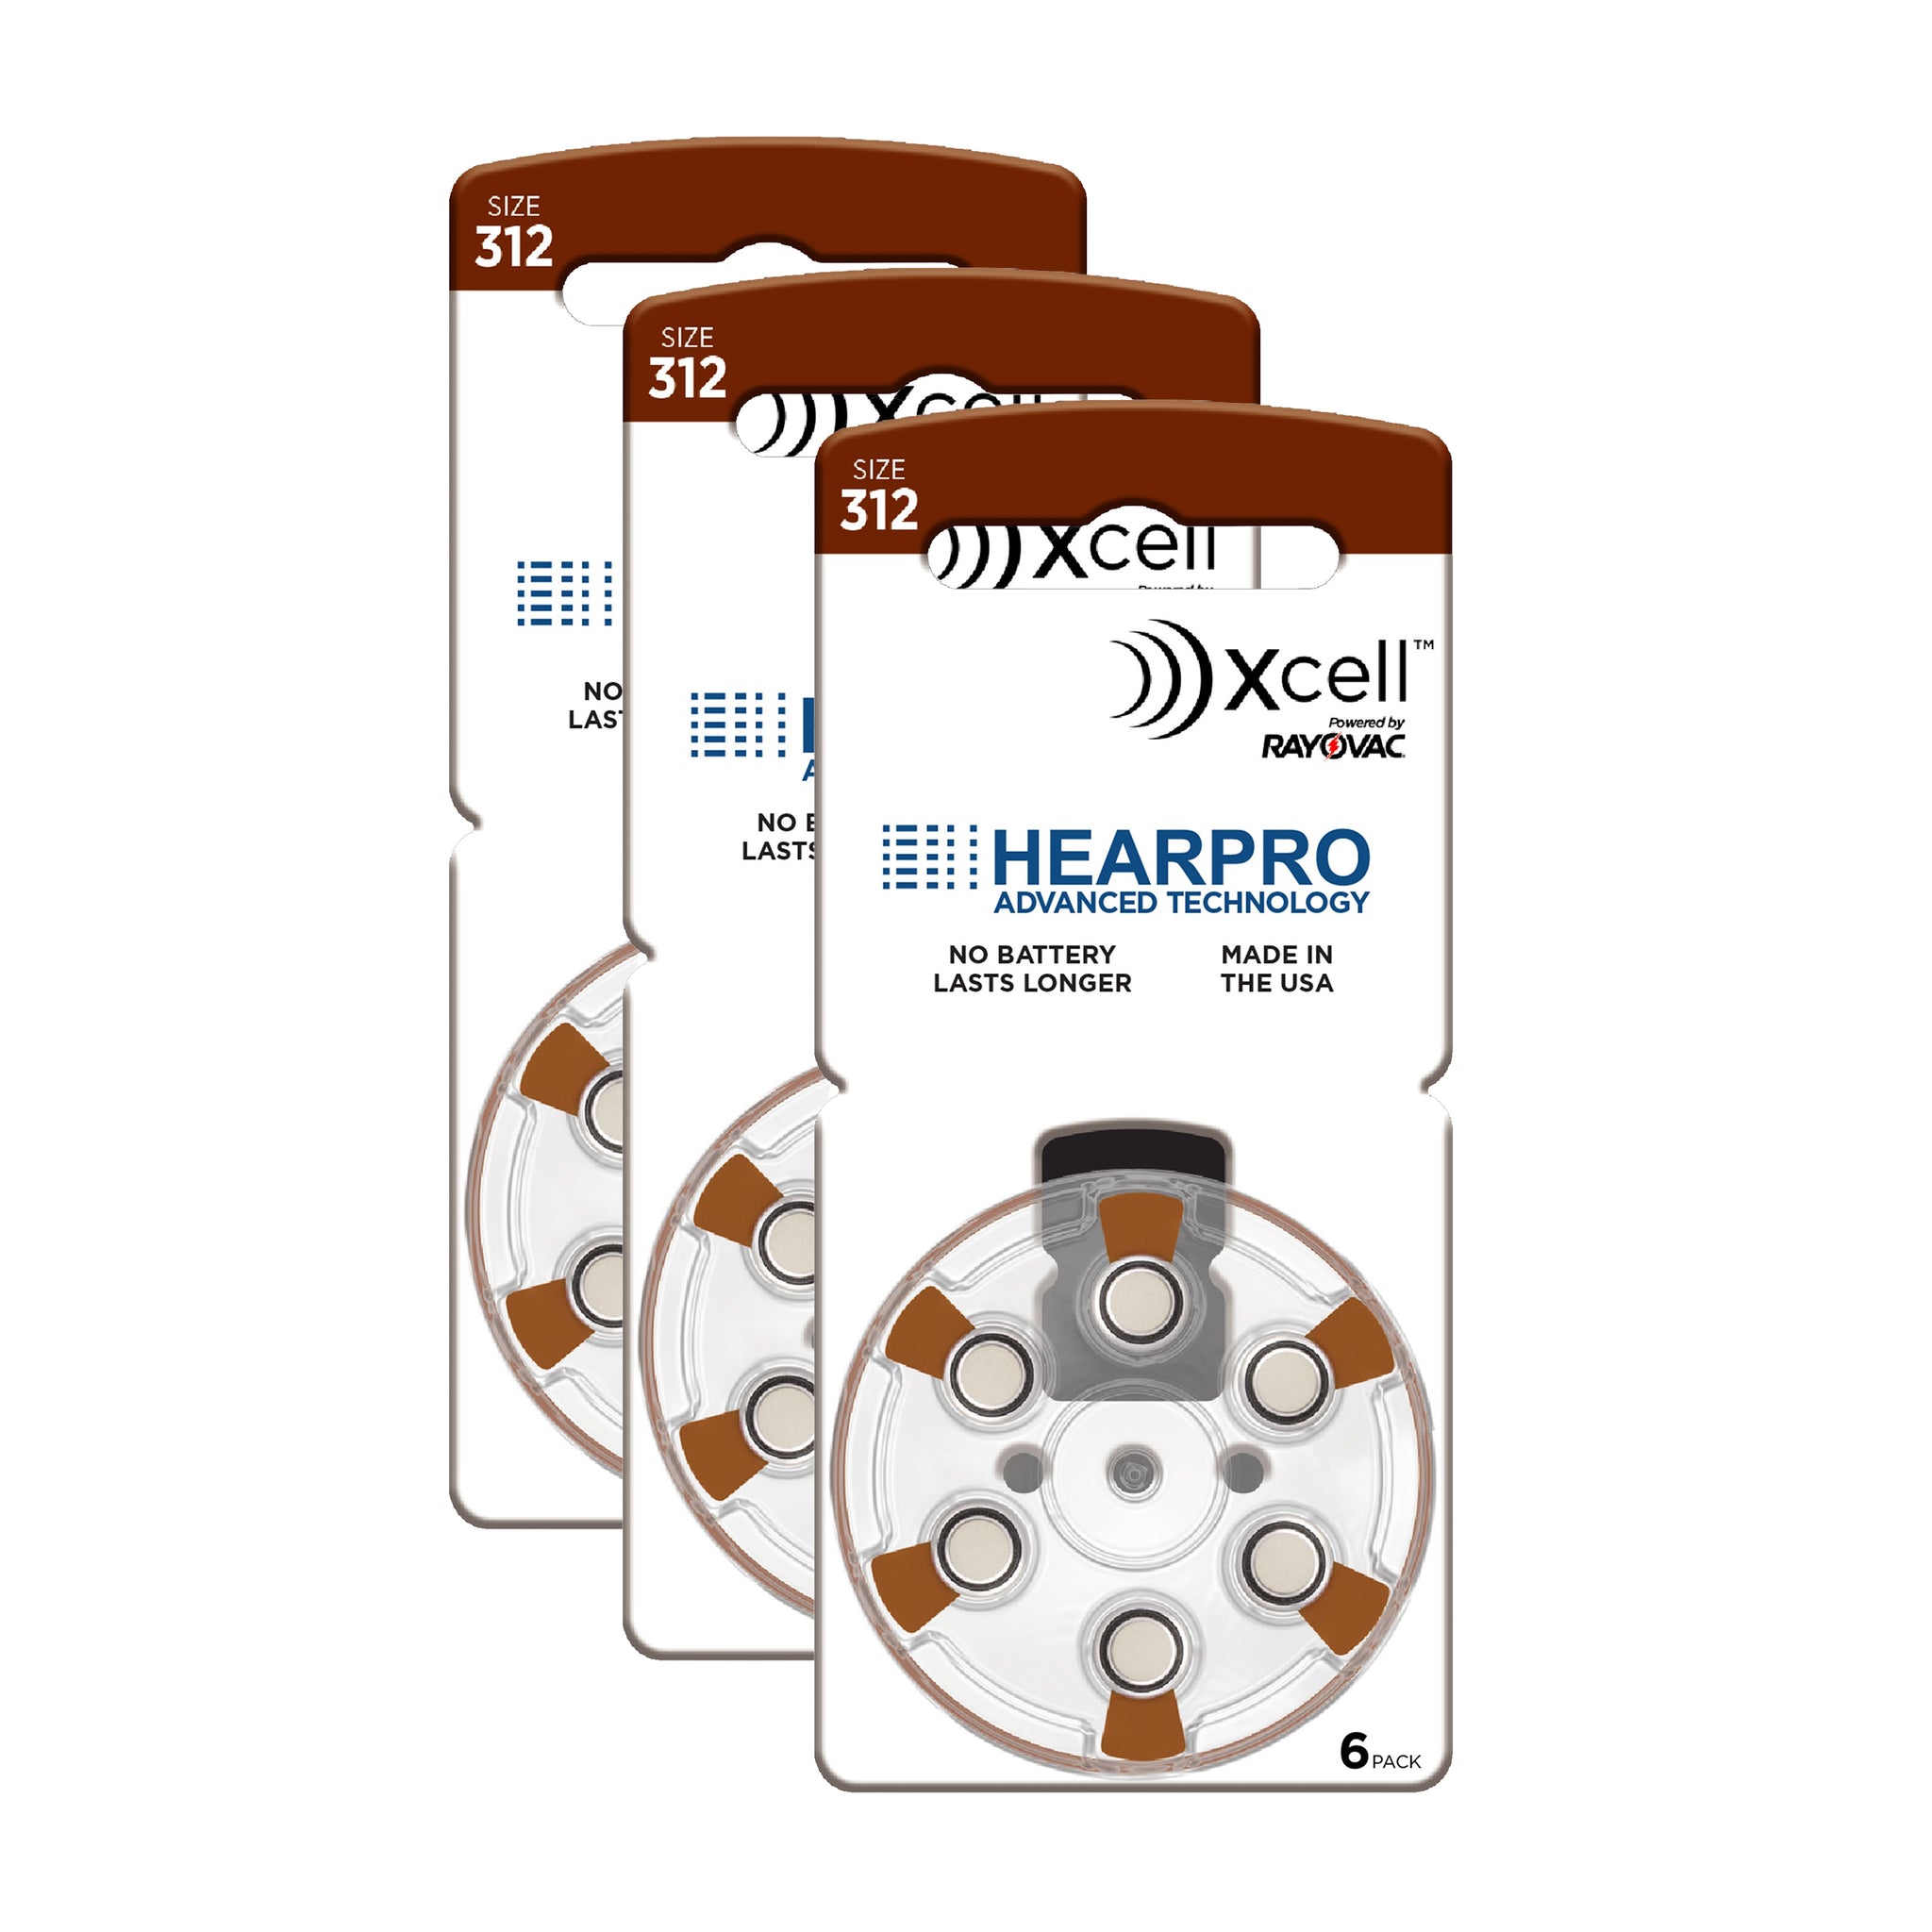 60 x Size 312 Rayovac Extra Advanced Hearing Aid Batteries - 10pk 60pc -  Lero